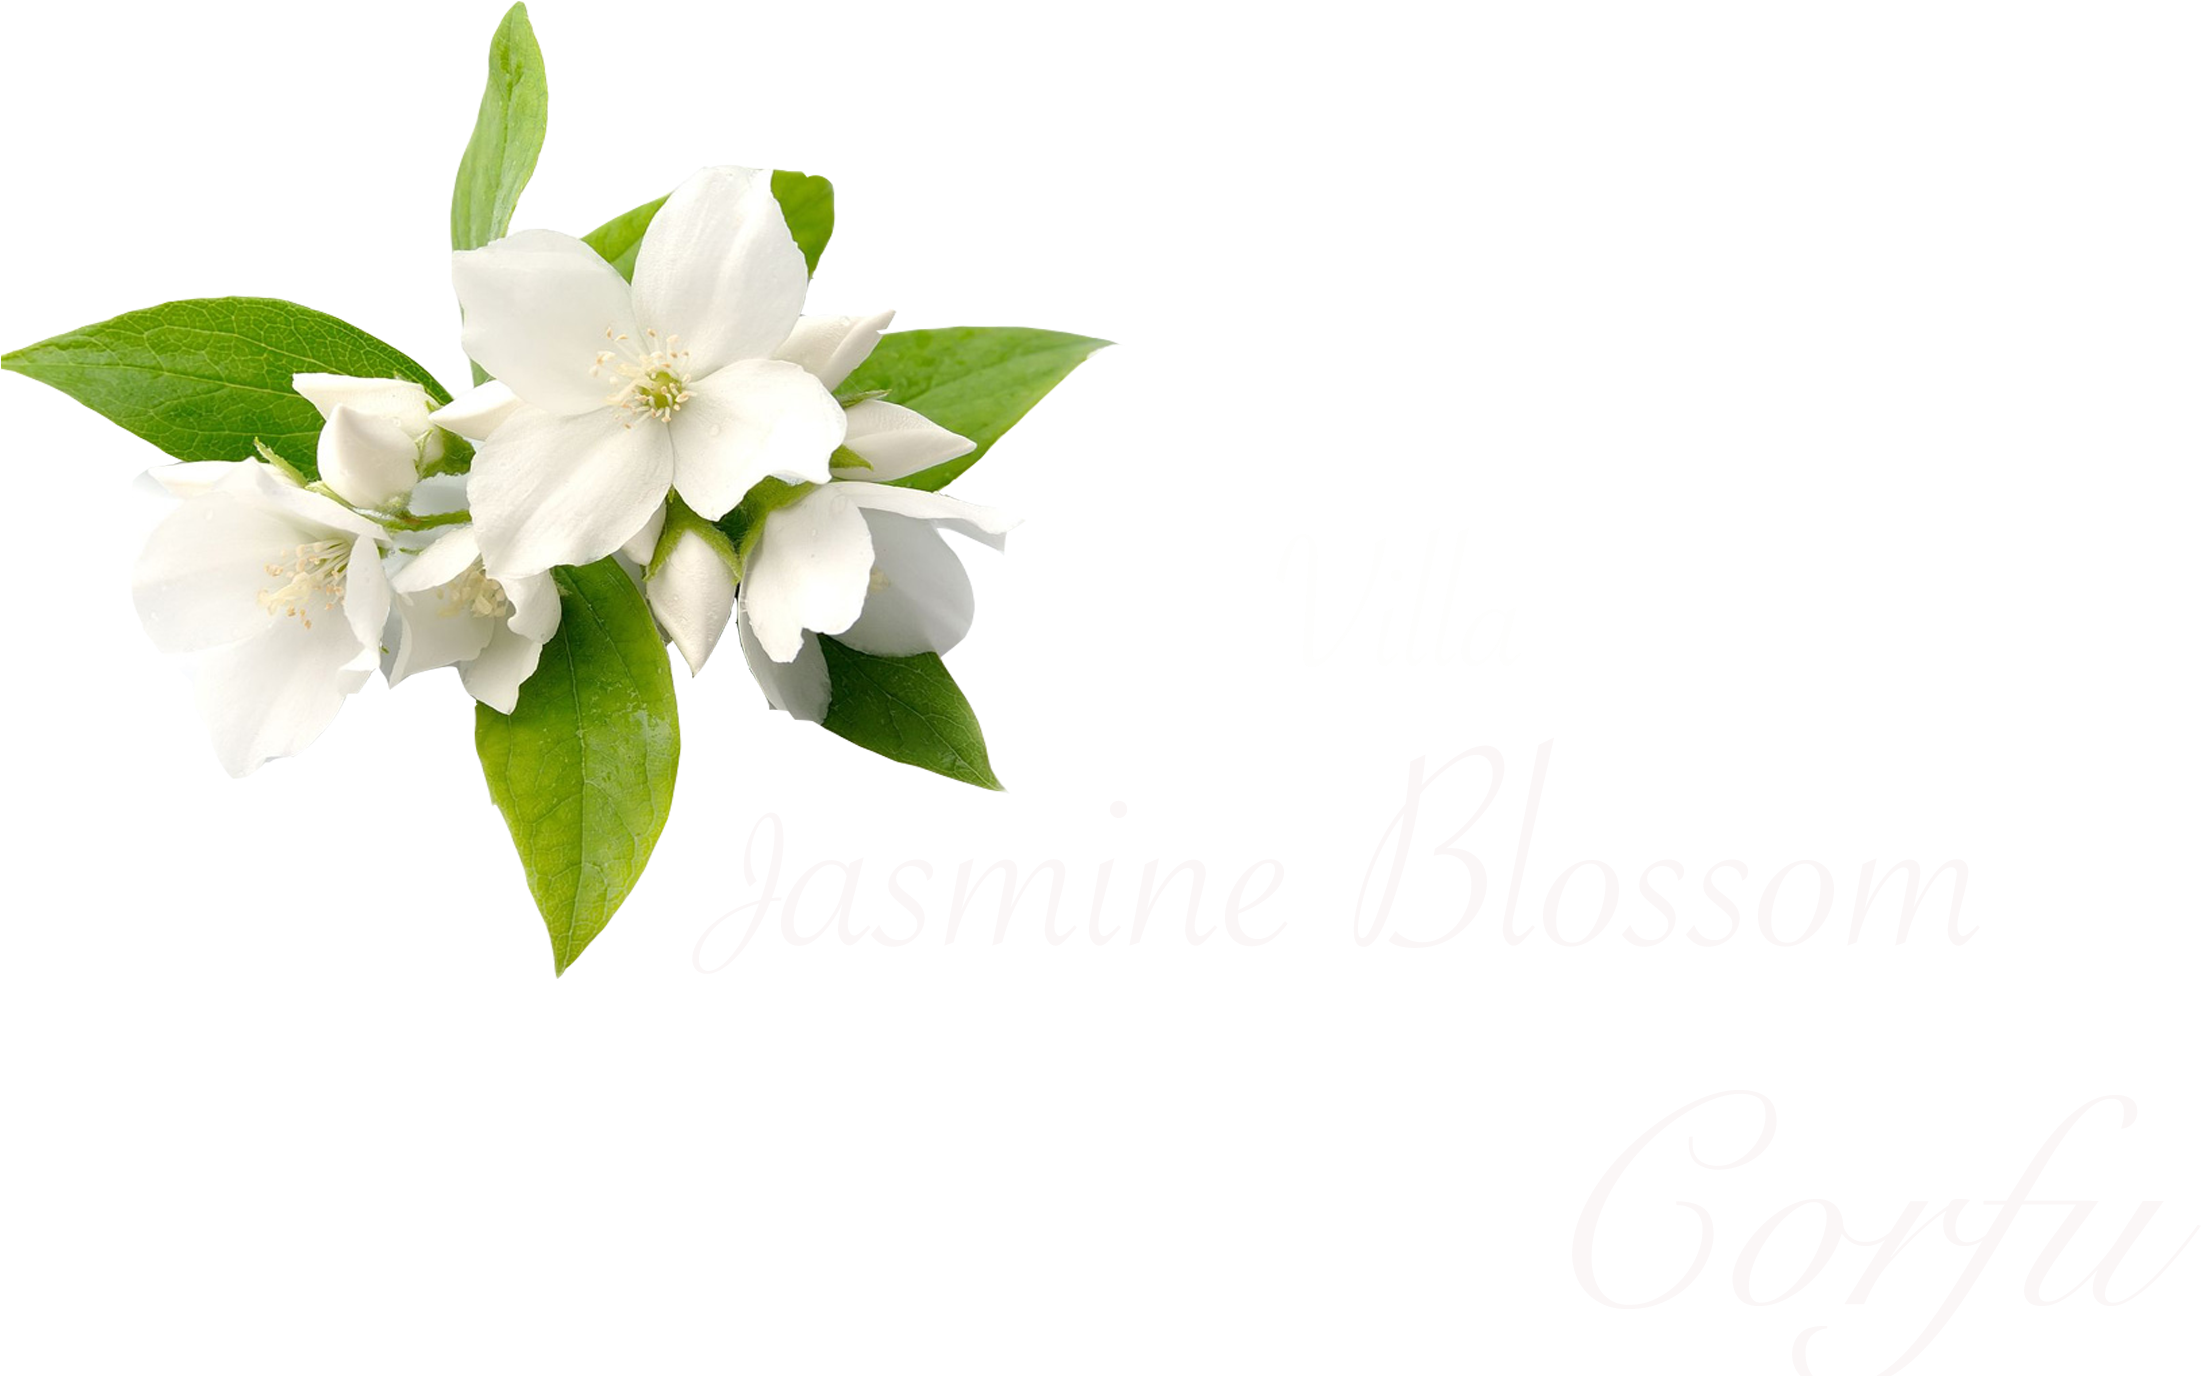 Jasmine Blossom Villa Corfu PNG image